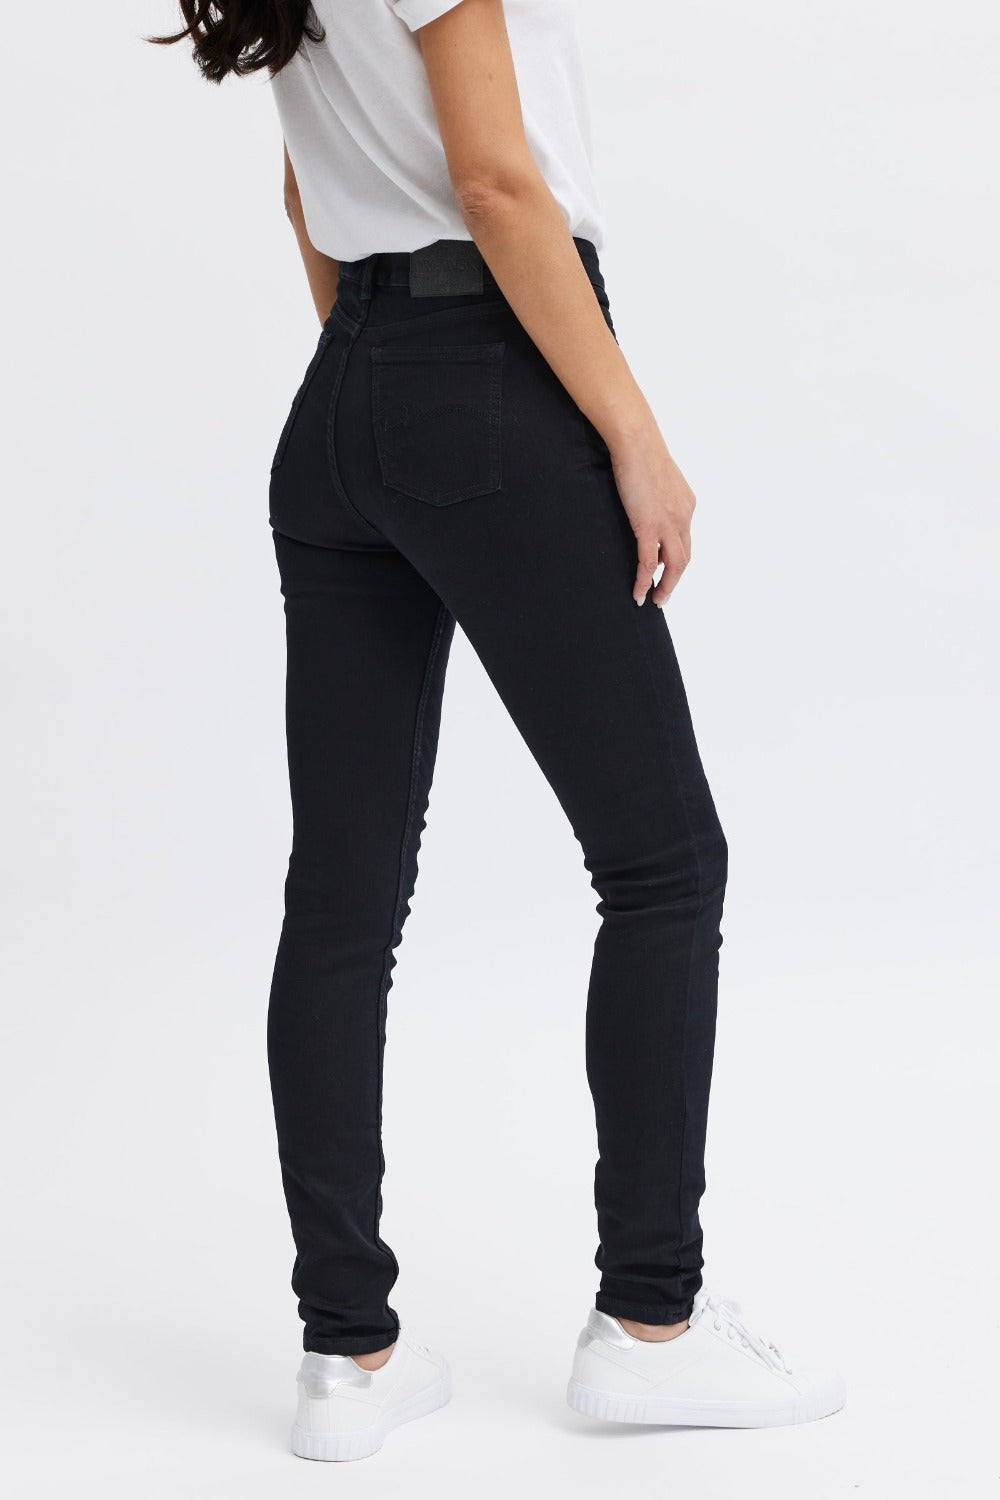 Women's black jeans - Ecolabel Nordic Swan - Organic Cotton & Recycled Fibers